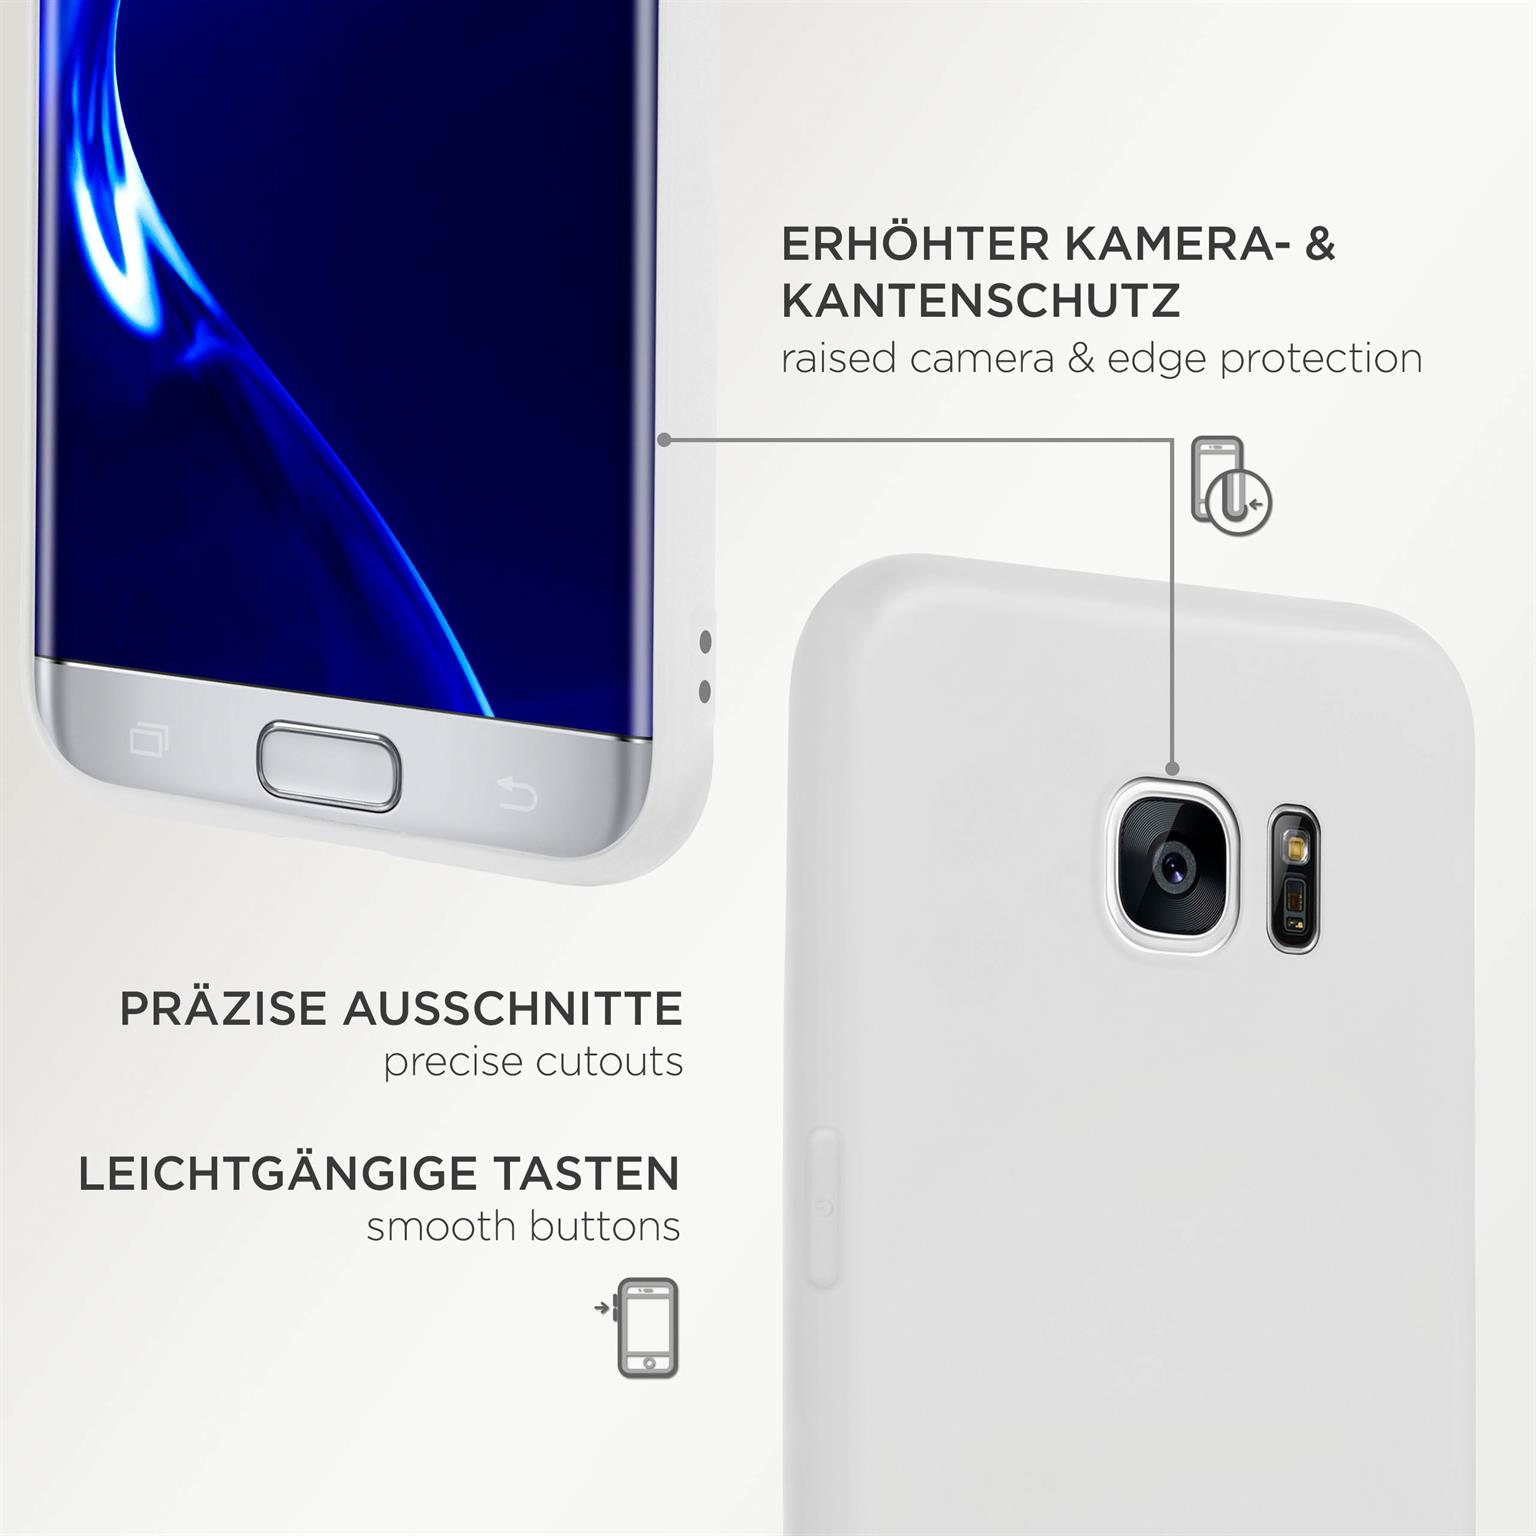 SlimShield Pro Samsung, S7 Backcover, Edge, ONEFLOW Case, Weiß Galaxy